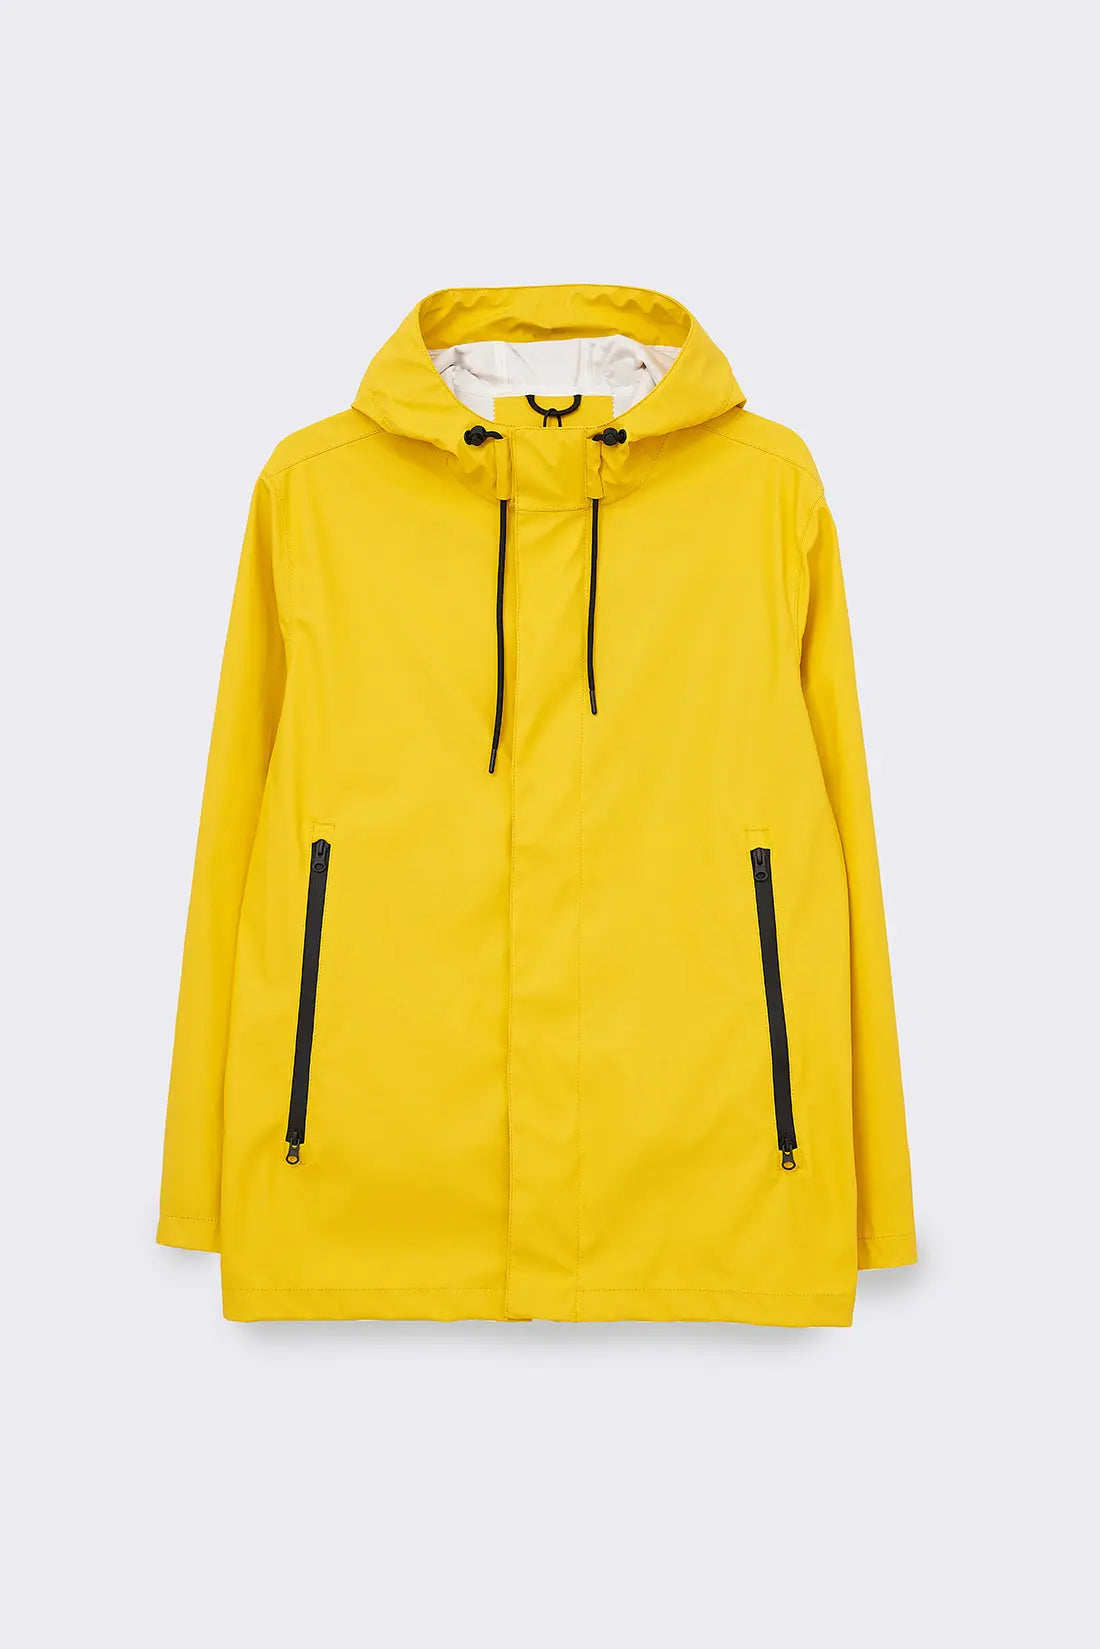 Tantä men's raincoat or raincoat. Yellow color. Pioviggine Lemon Chrome –  Tantä Rainwear